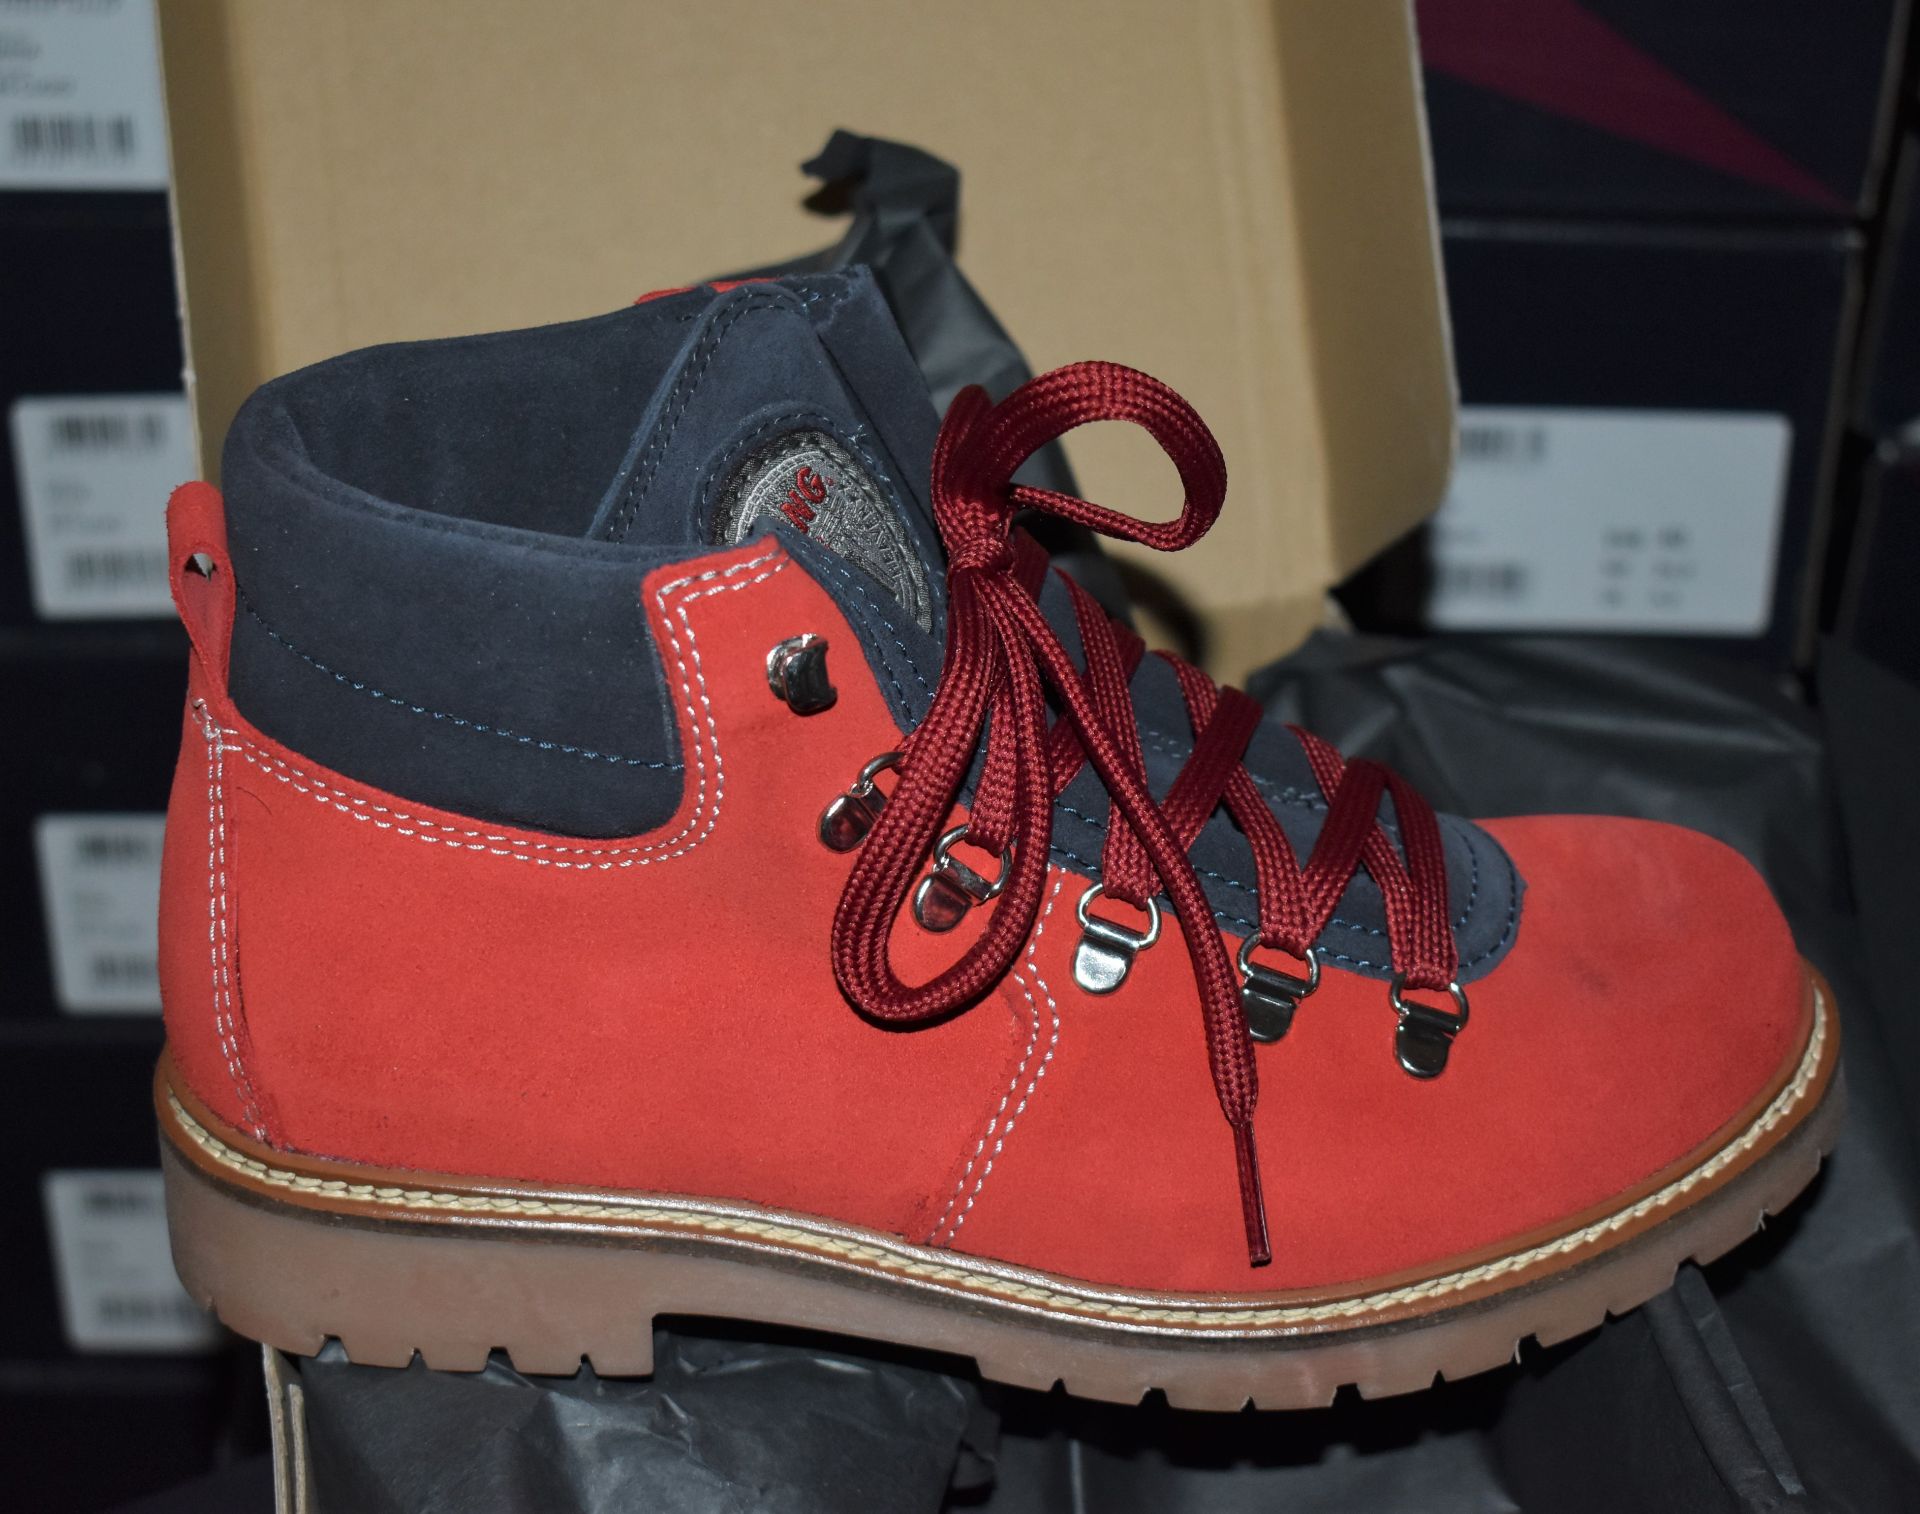 1 x Pair of Designer Olang Merano BTX 815 Rosso Women's Winter Boots - Euro Size 38 - Brand New